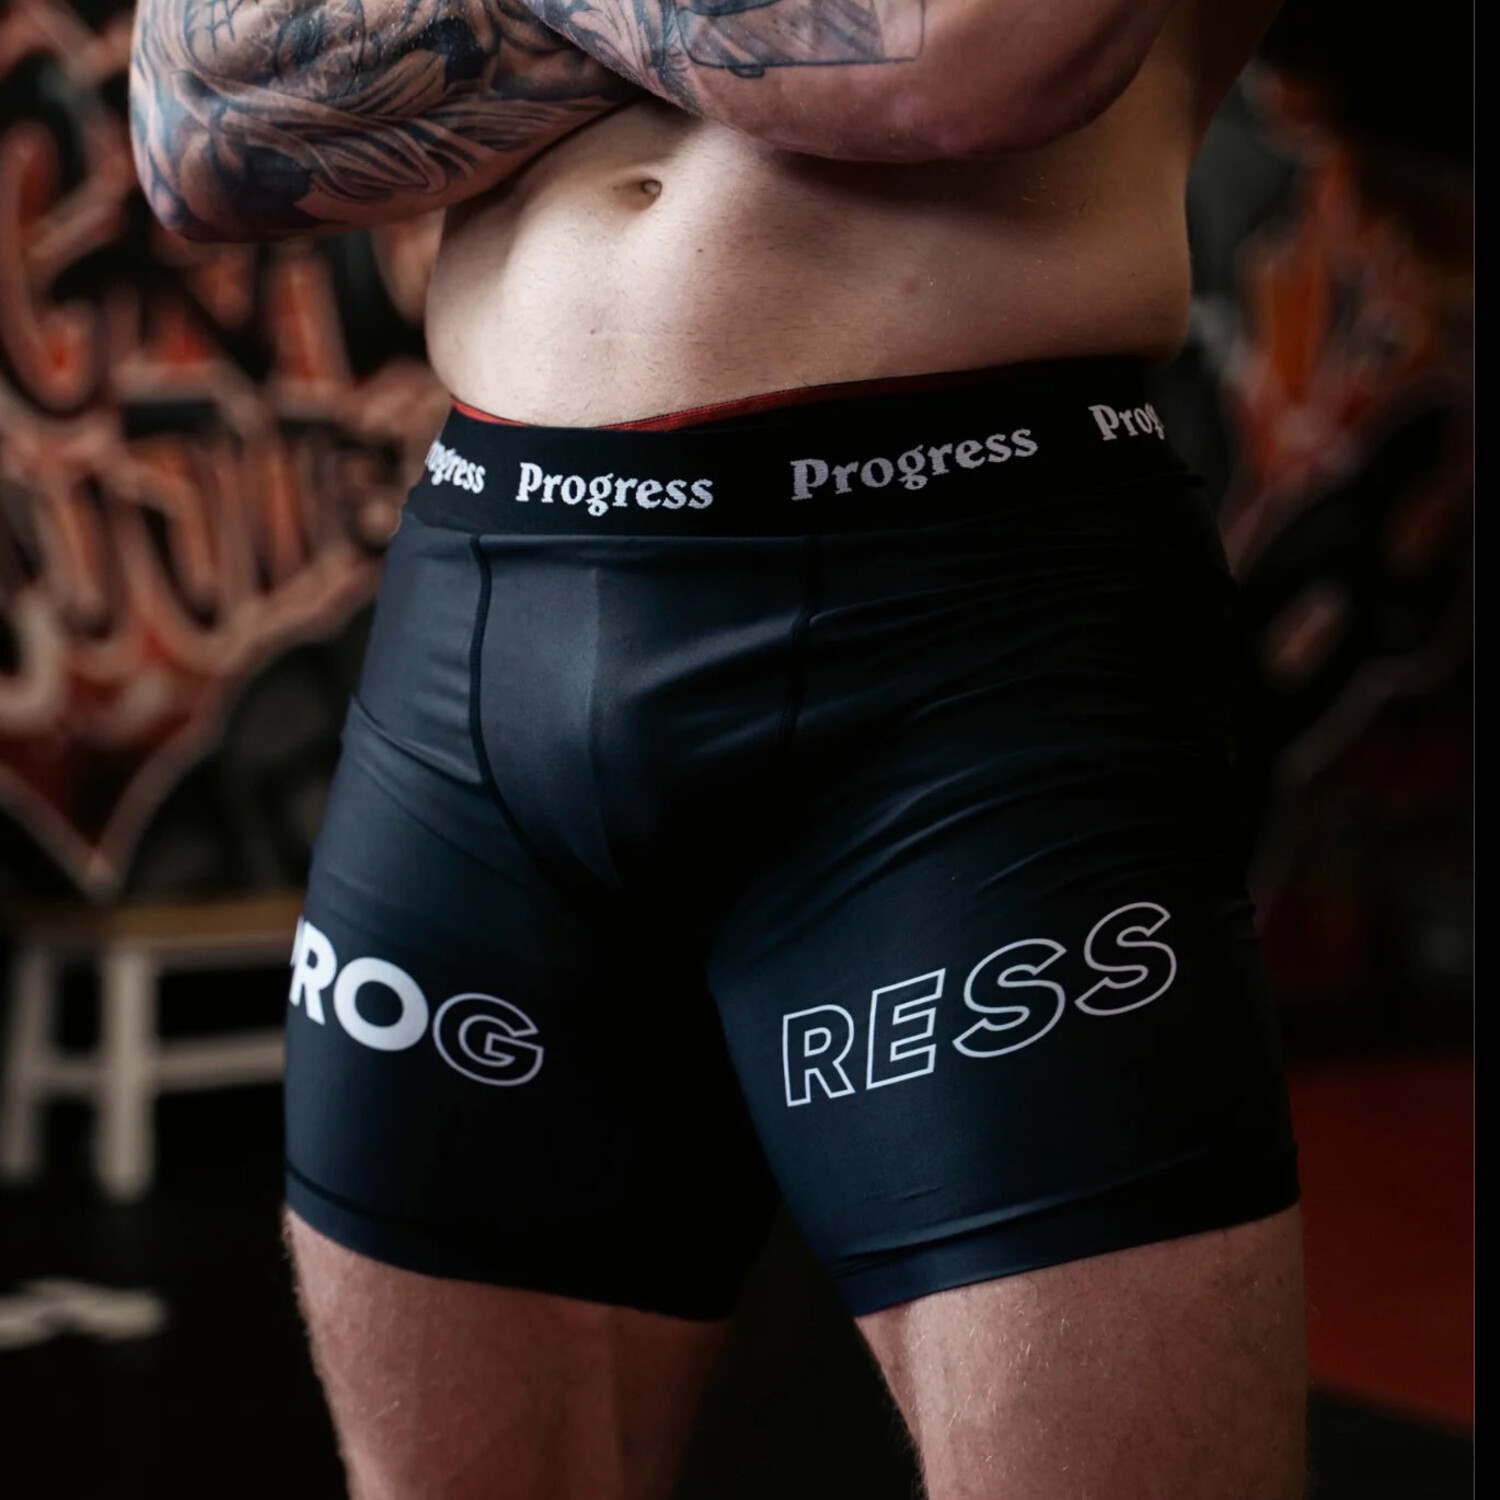 BJJ Compression Shorts (Vale Tudo Shorts) for Men